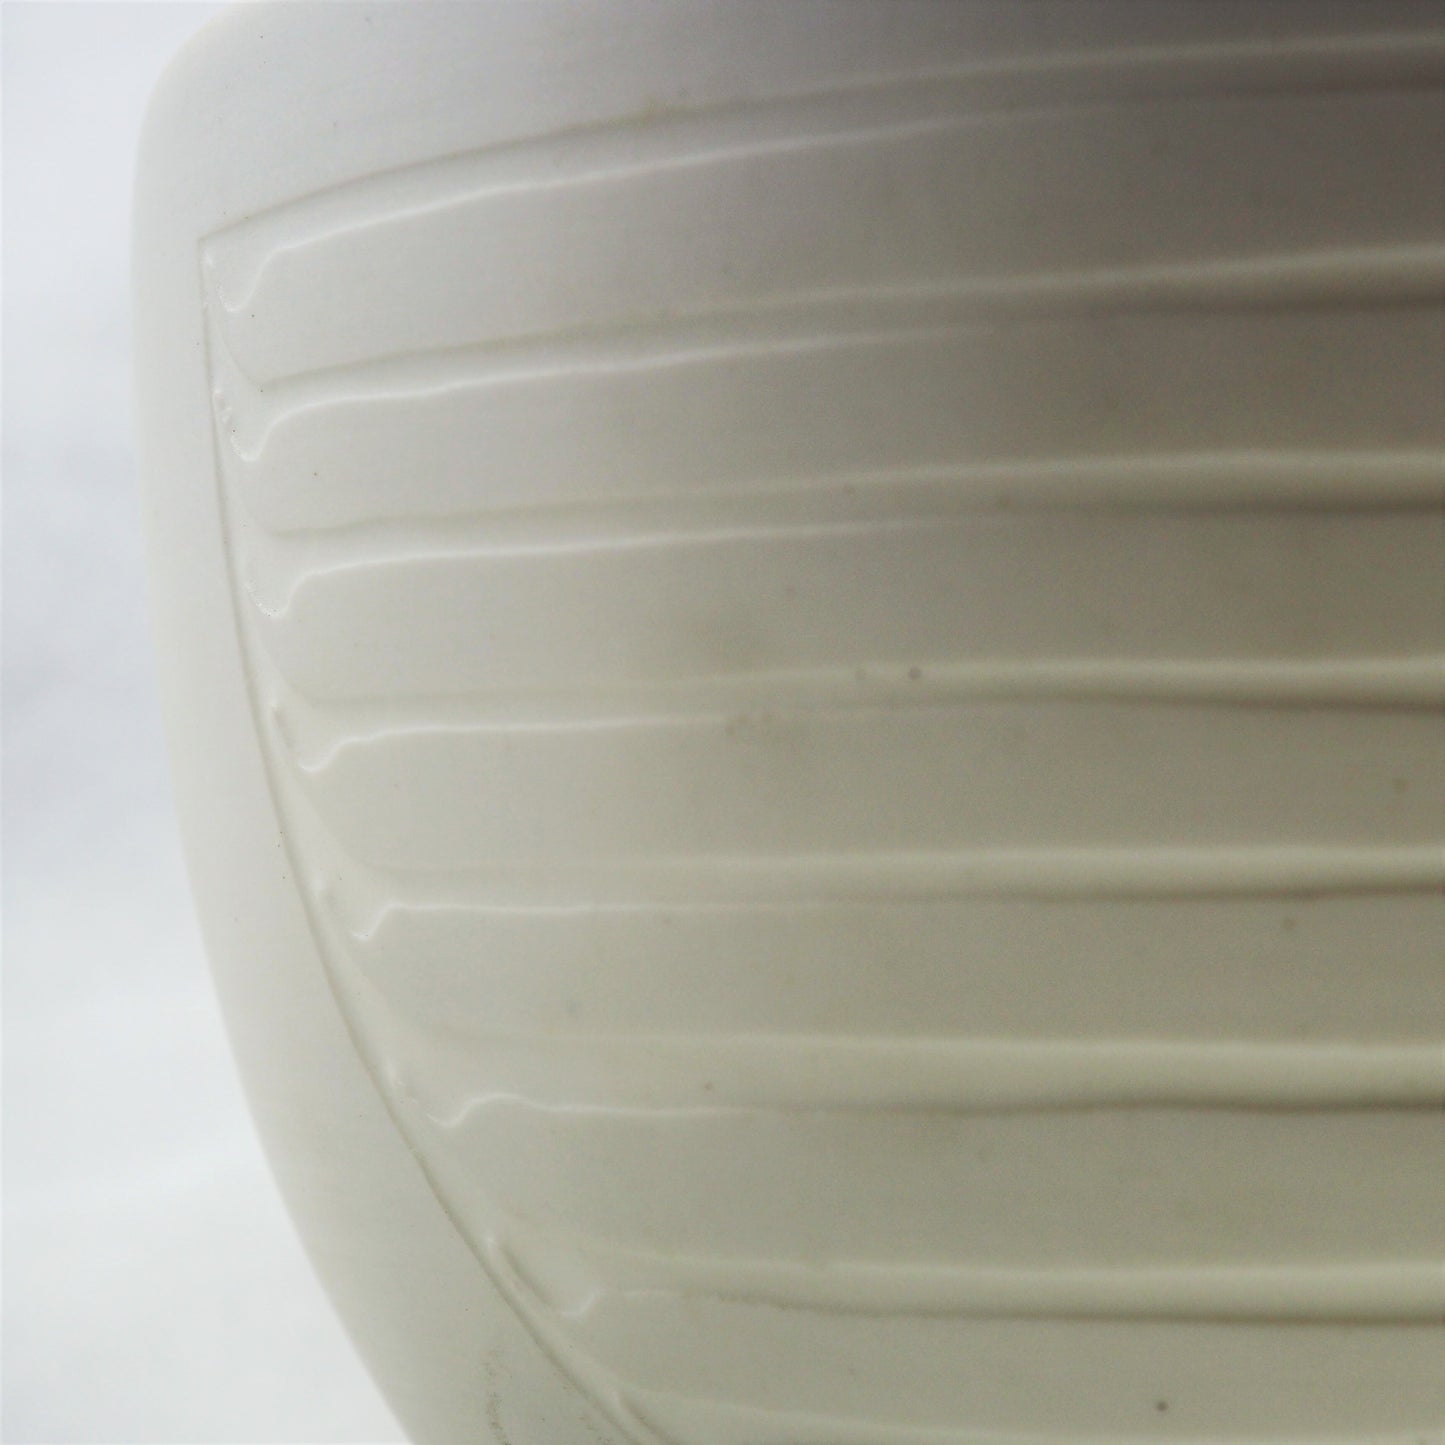 Les Blakebrough – Medium Porcelain Bowl | Les Blakebrough | Primavera Gallery